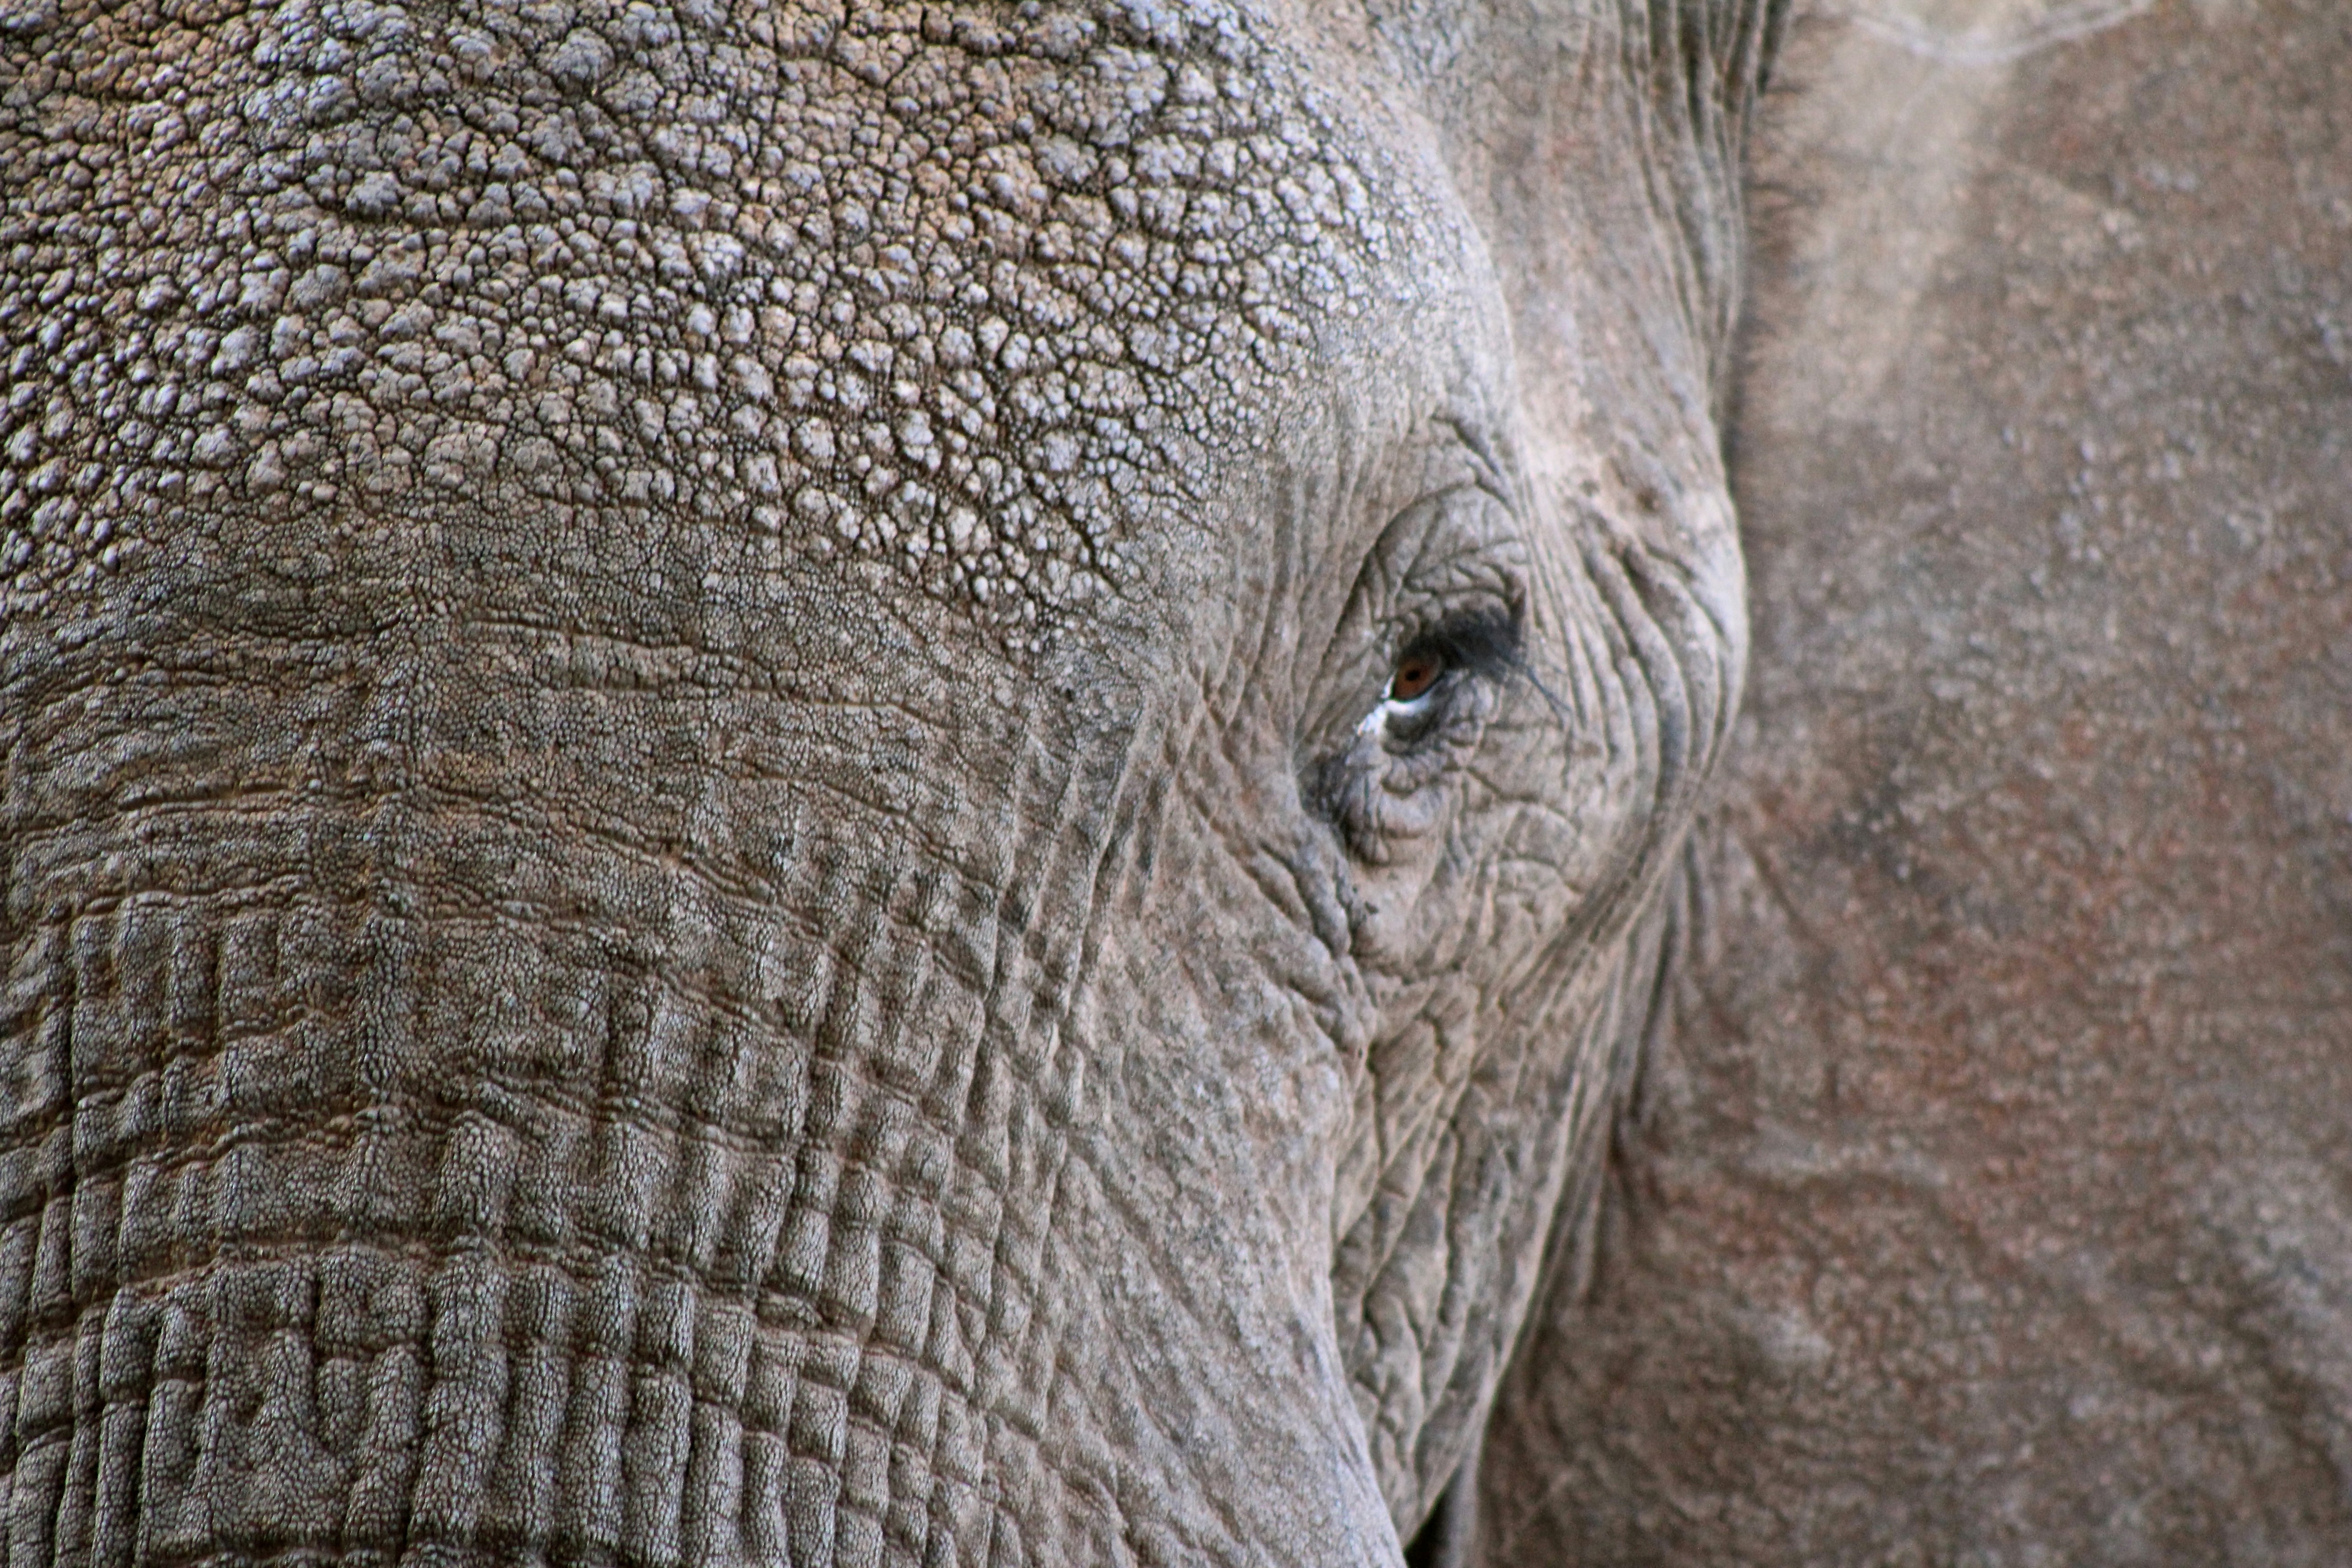 closeup photo of elephant face